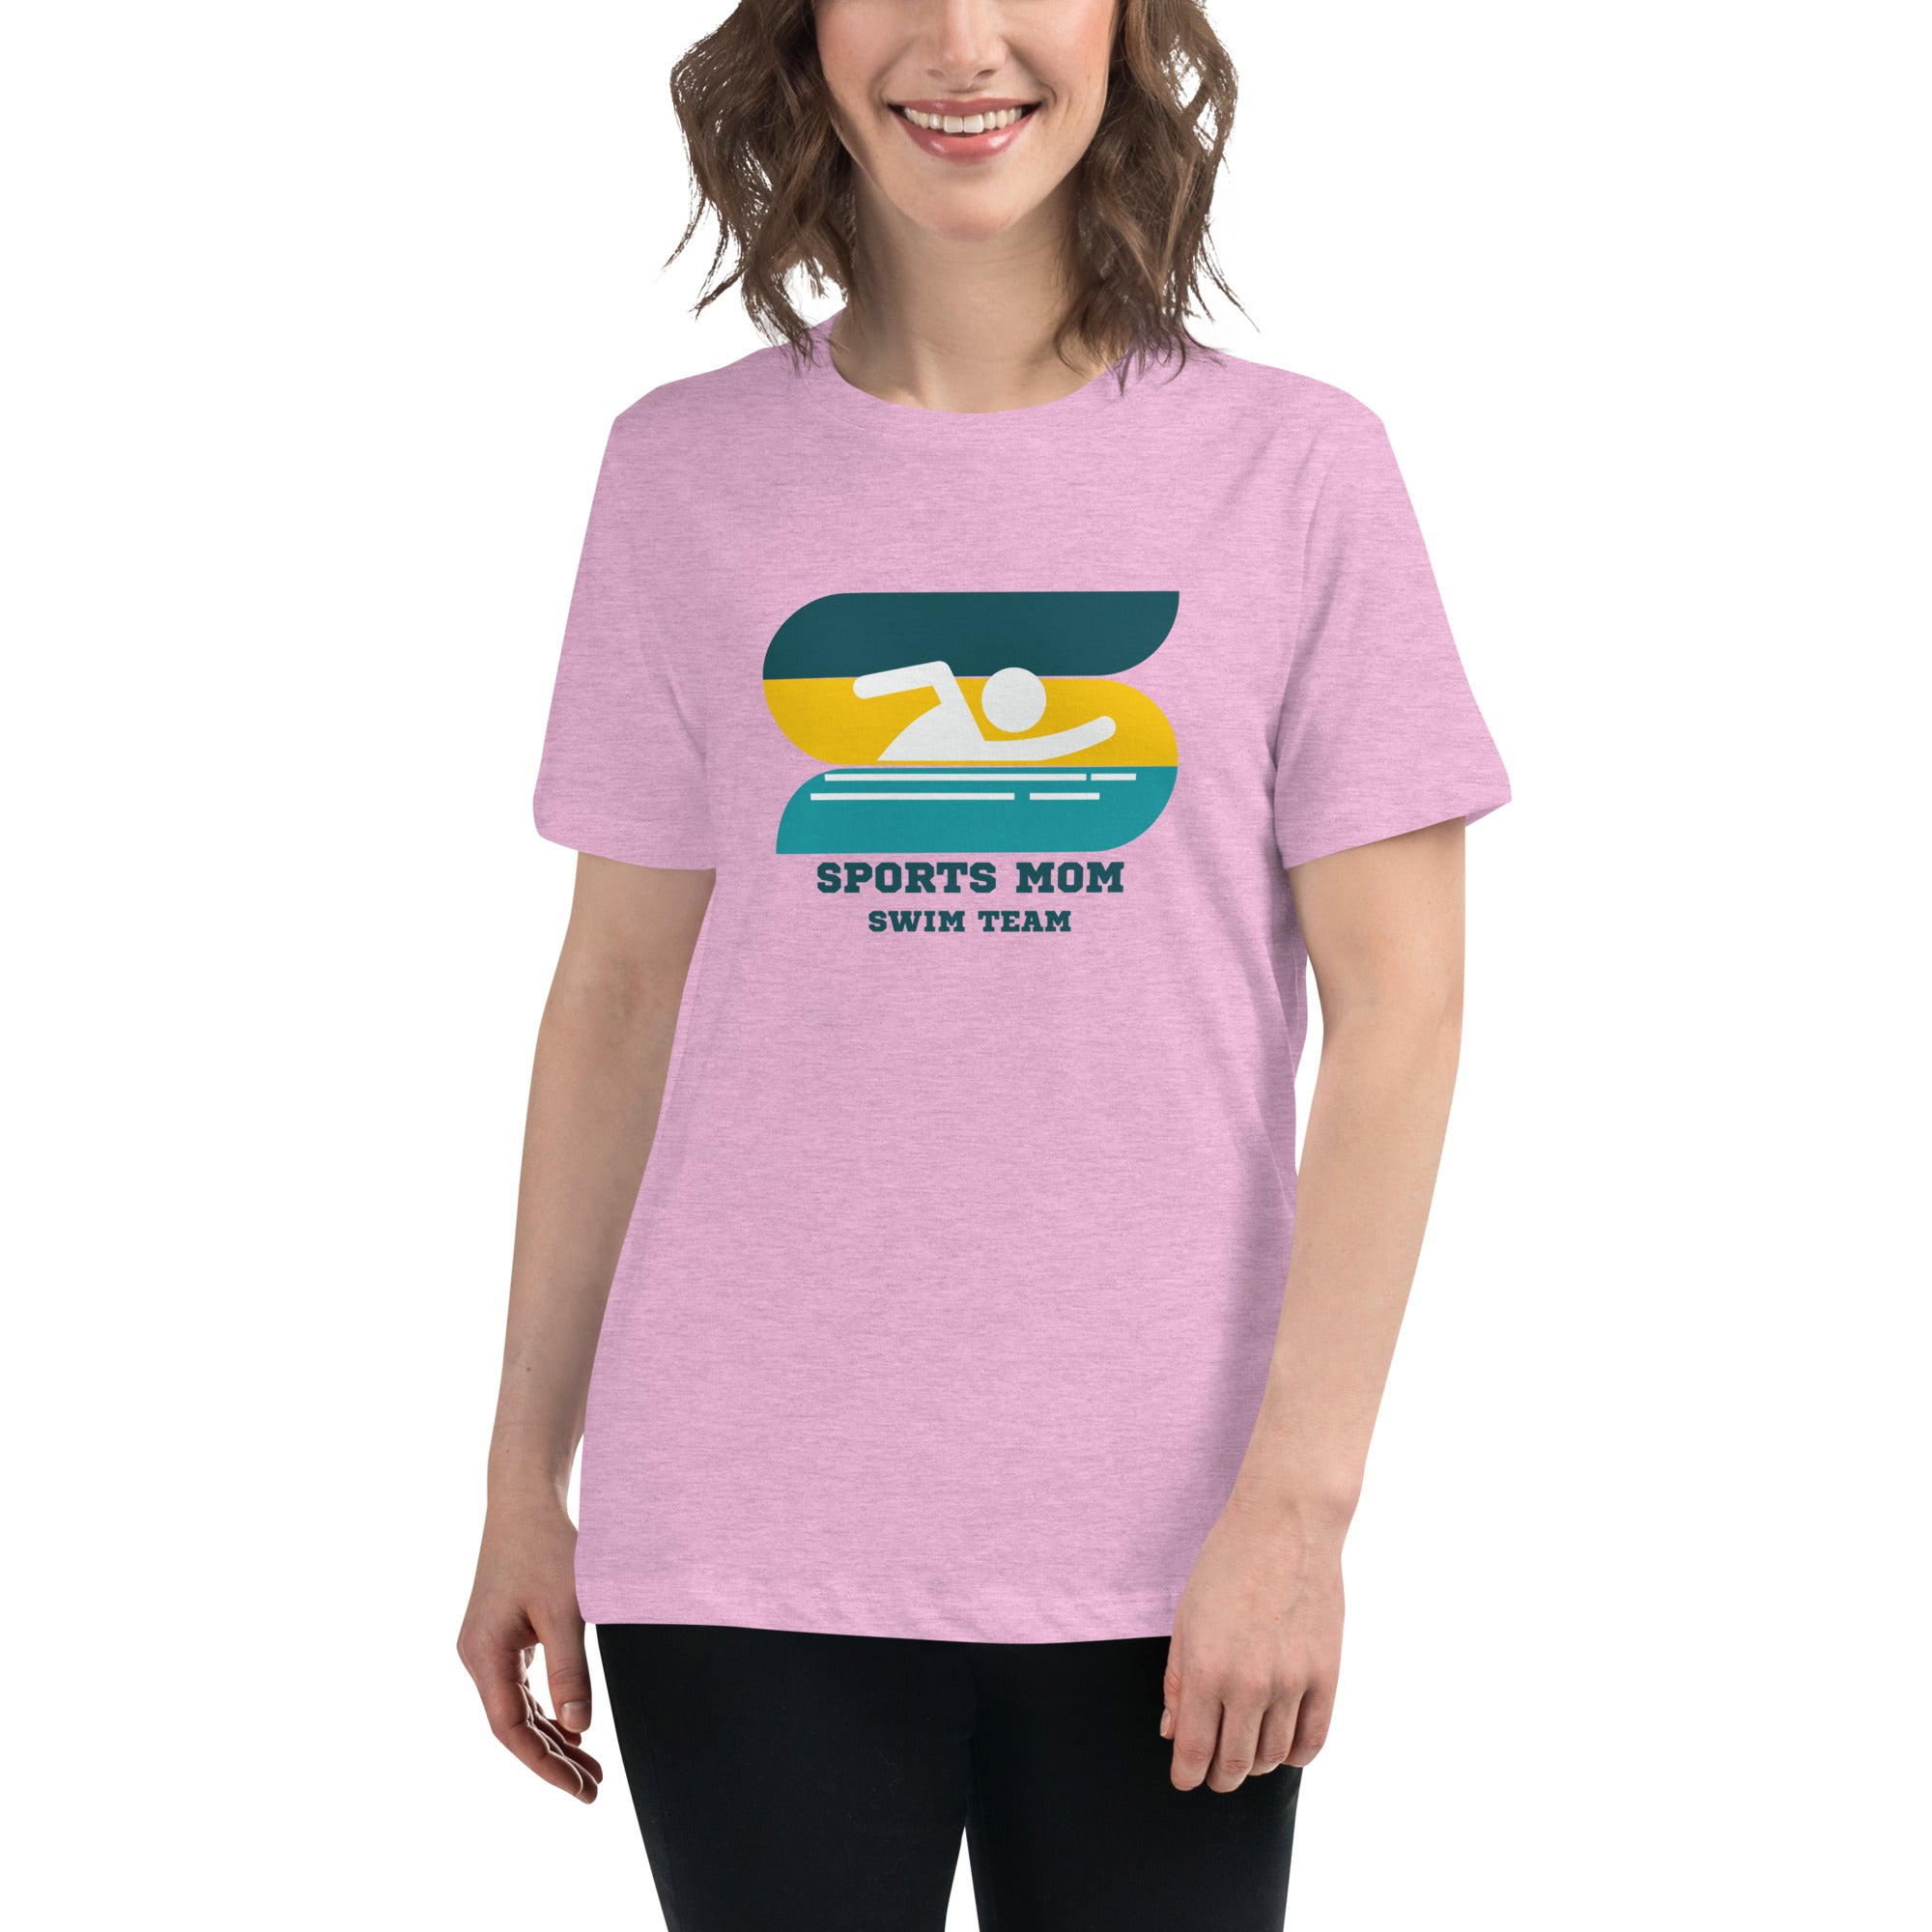 The Original Sports Mom Swim Team Women's Premium T-Shirt